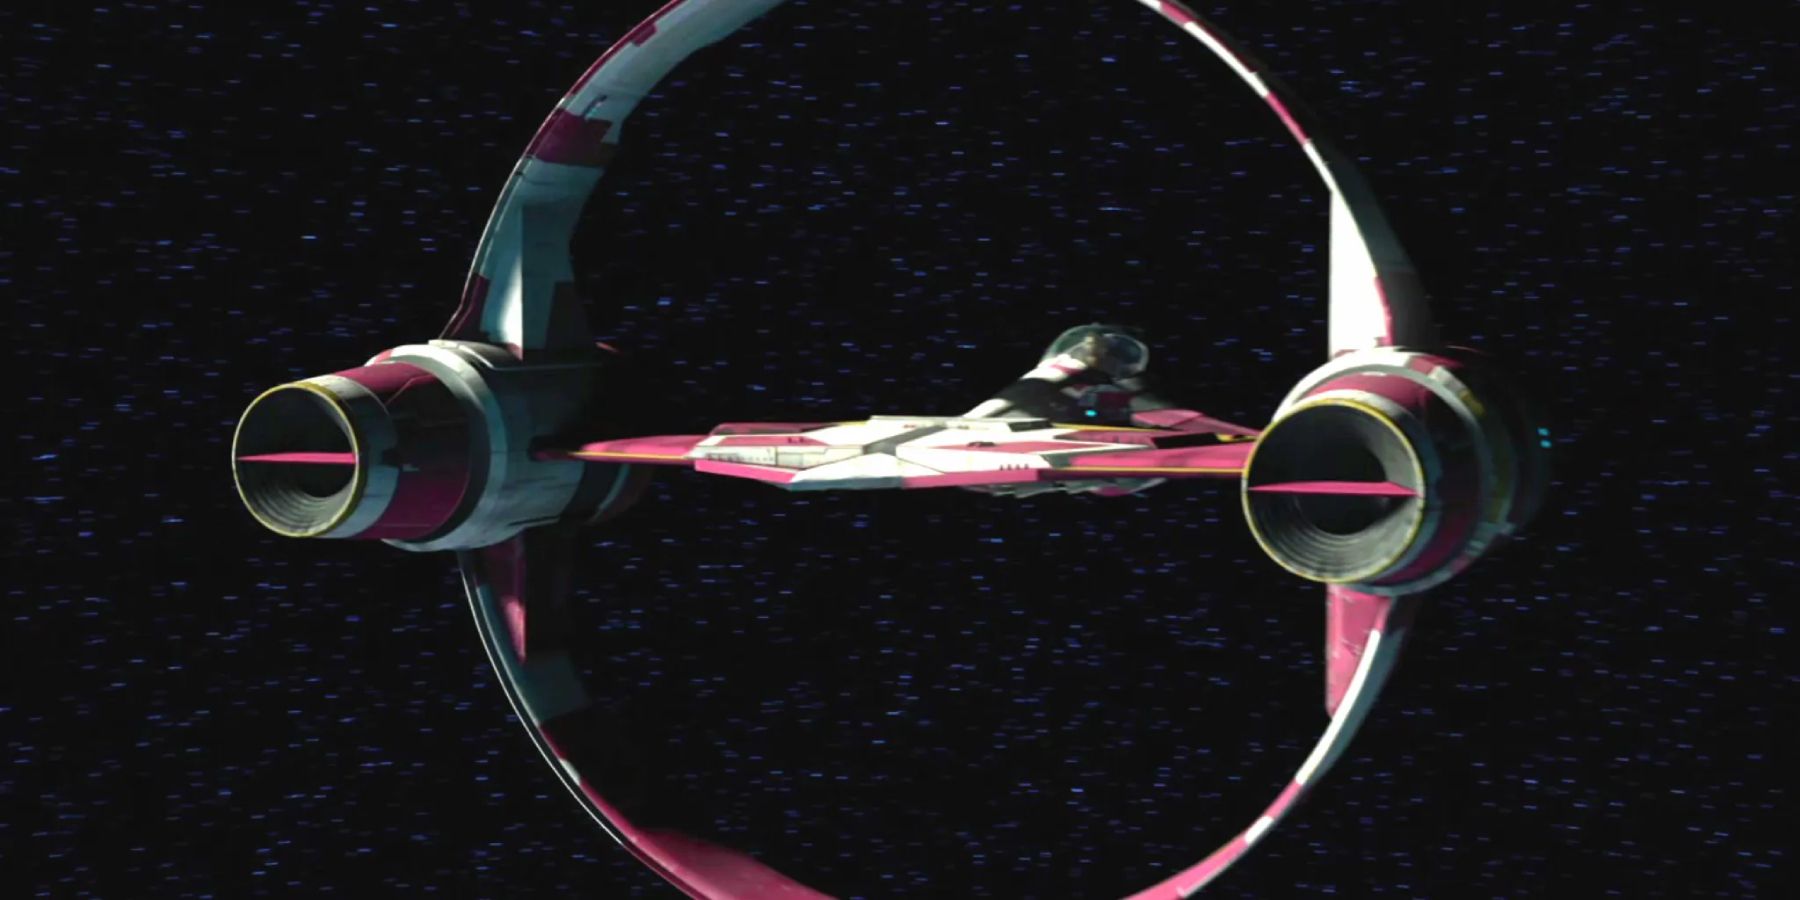 Star Wars Episode II Attack of the Clones Obi-Wan Kenobi ship hyperspace ring